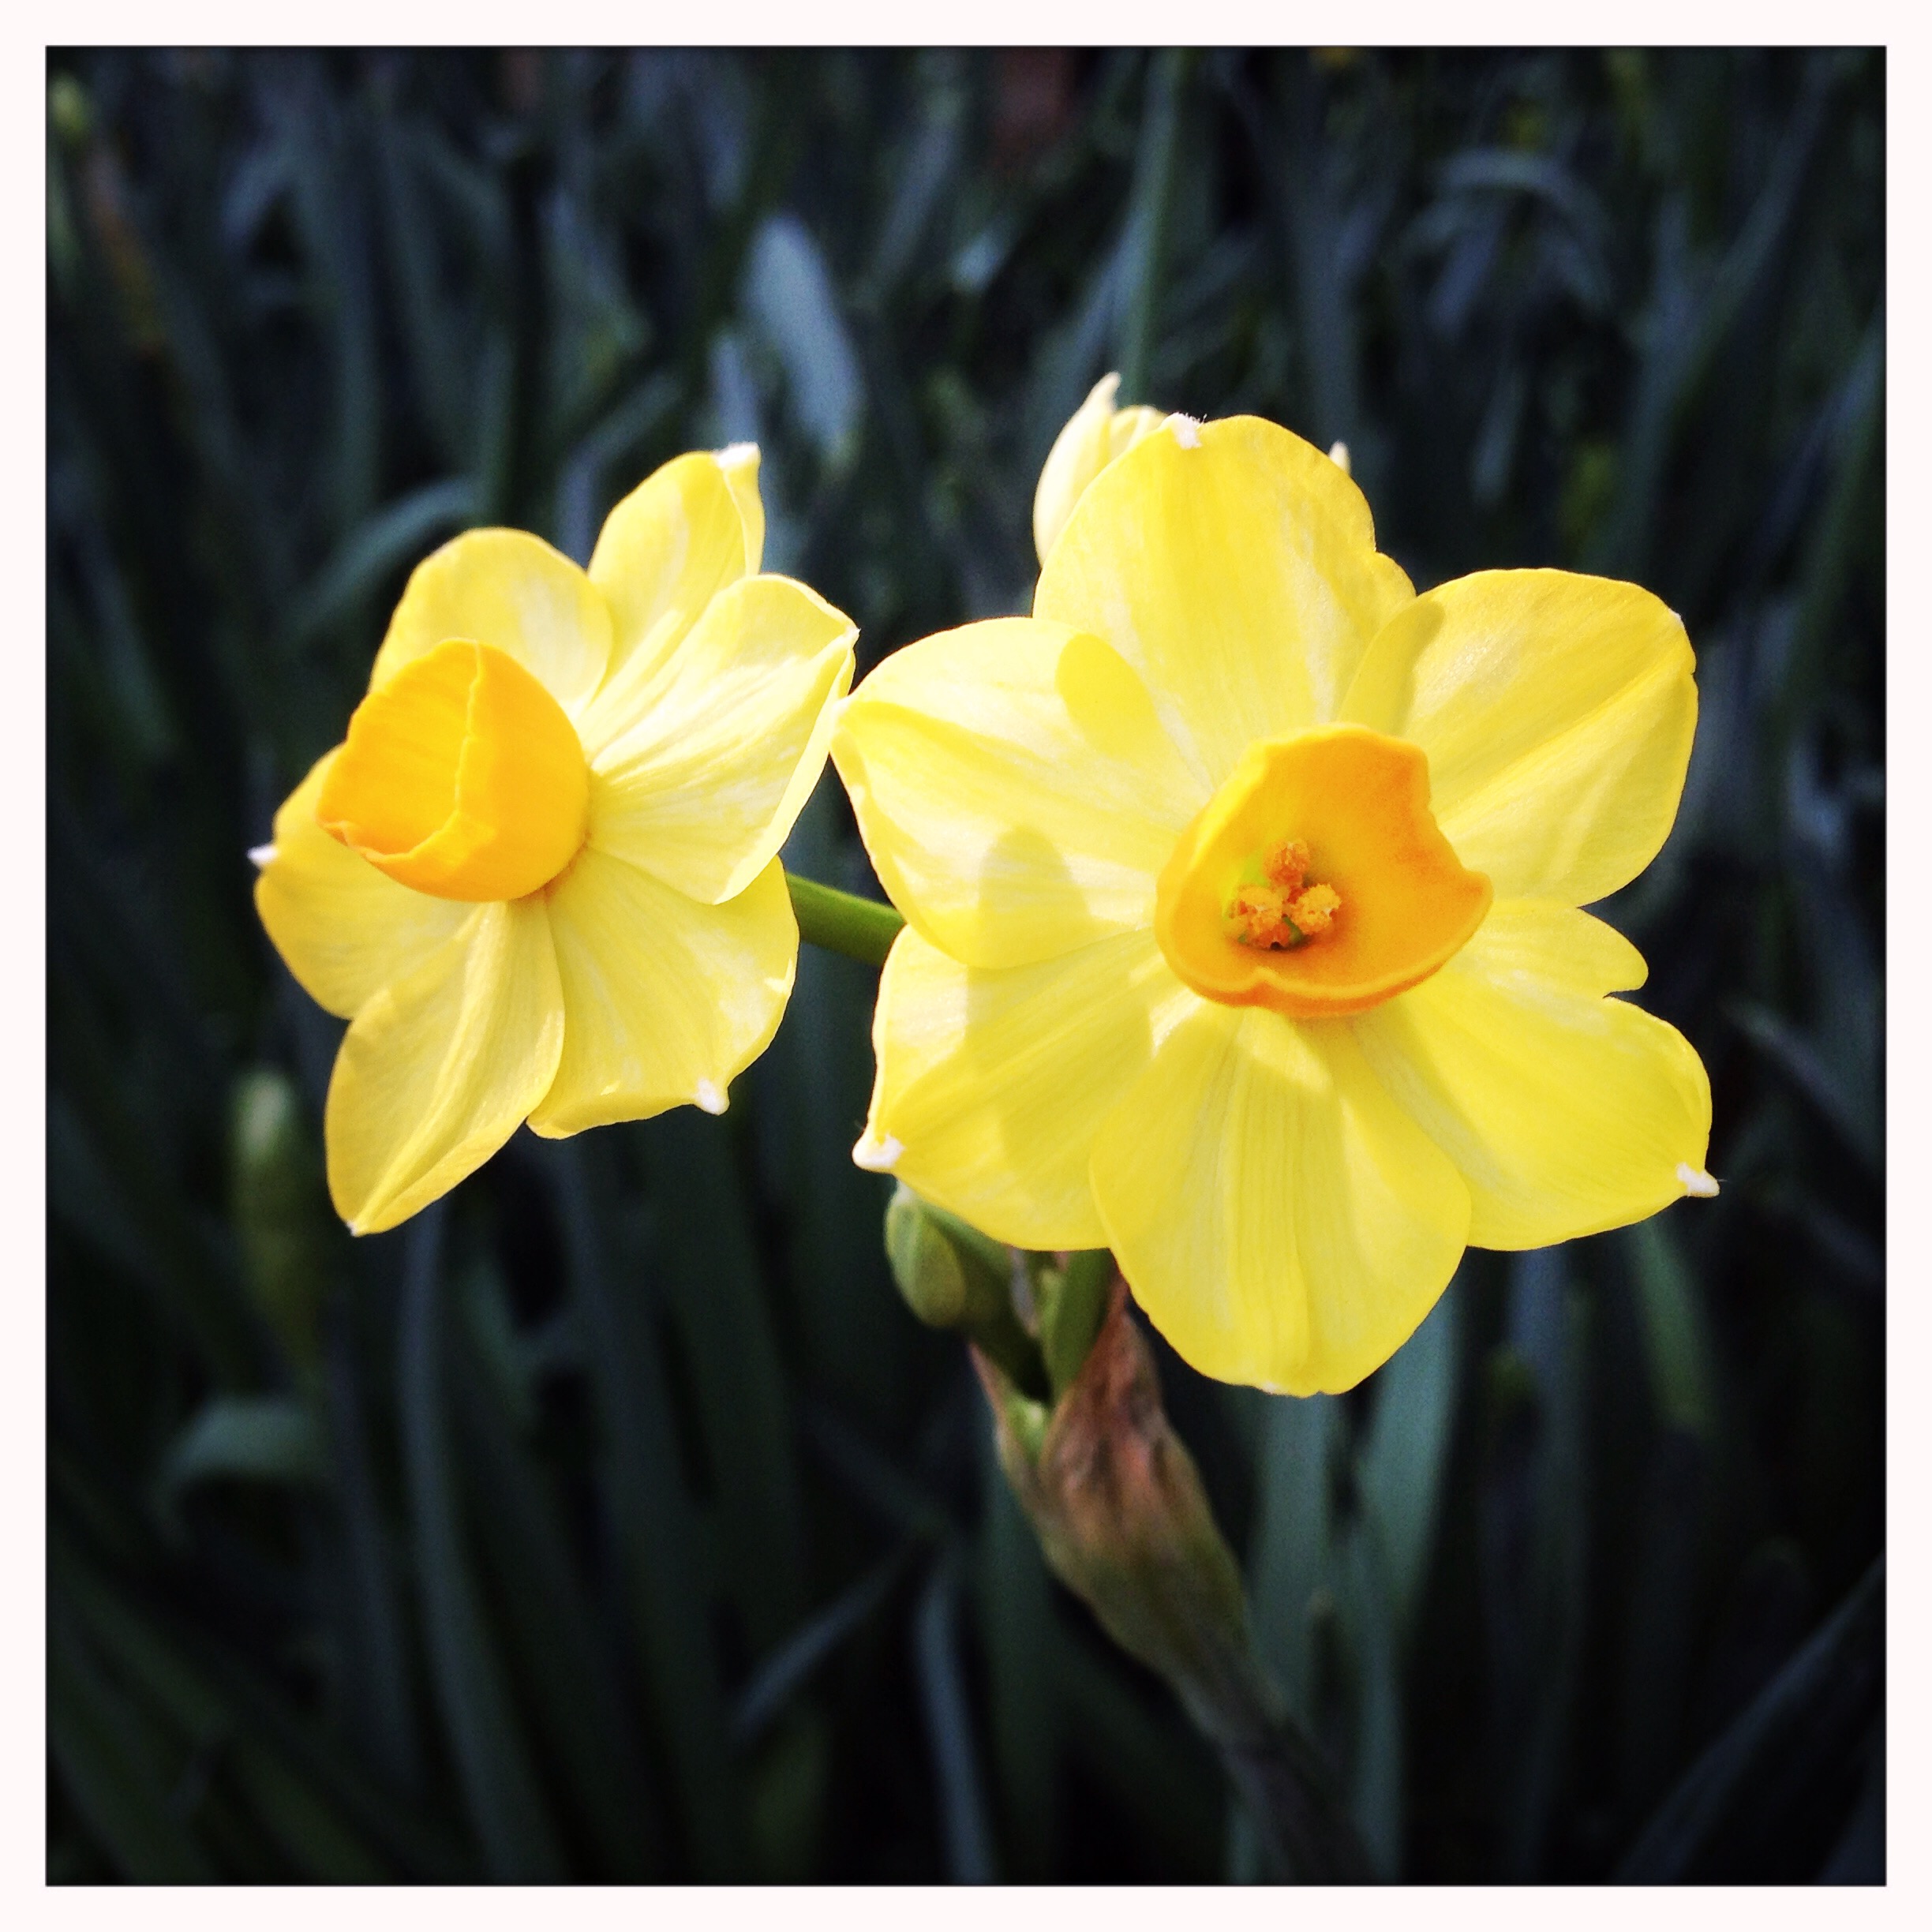   Narcissus papyraceus &nbsp;'Grand soleil' at Reiman Gardens conservatory. 